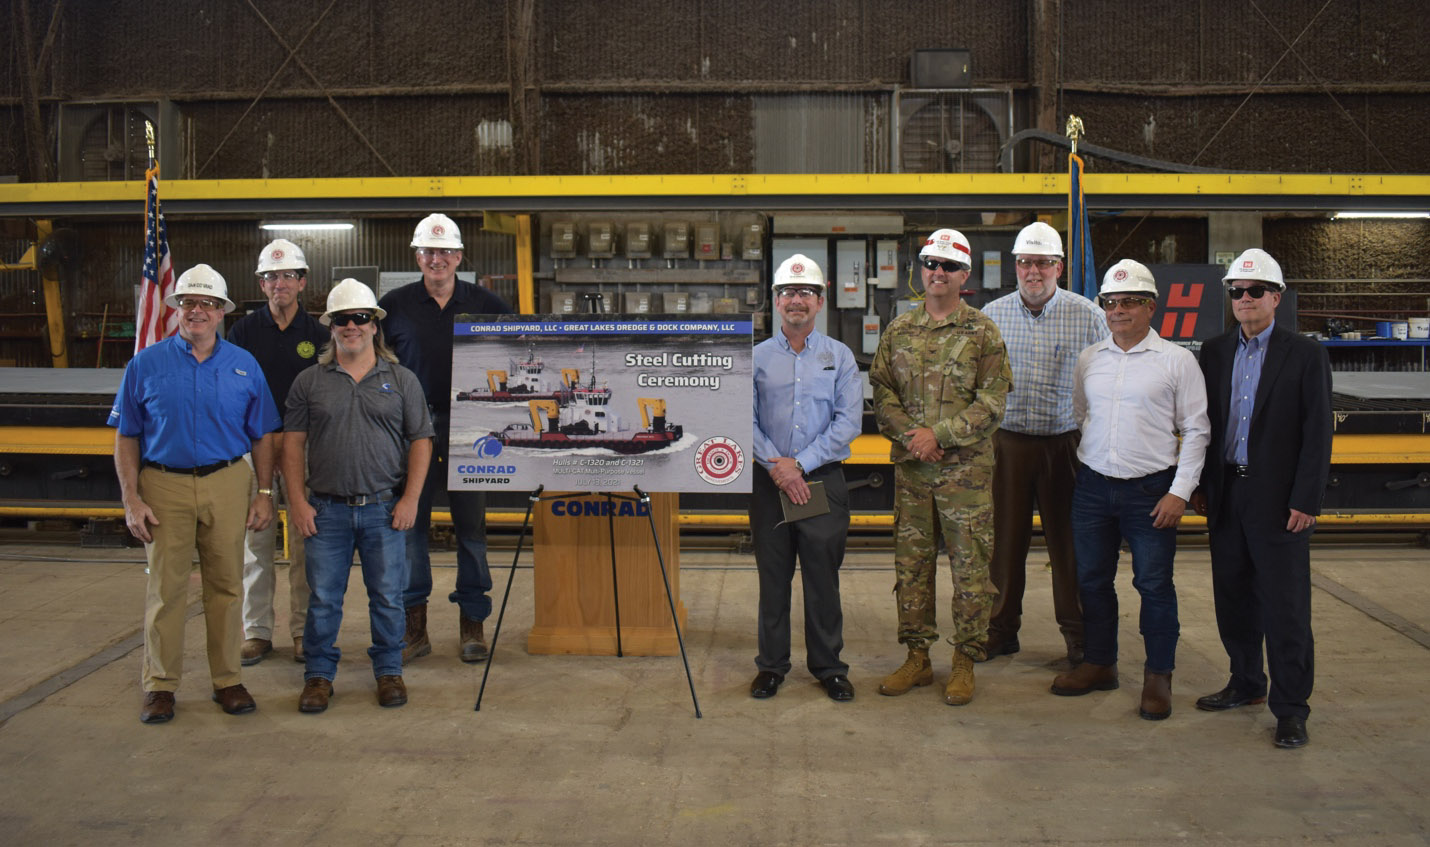 Conrad Shipyard Hosts Steel-Cutting Ceremony For GLDD Multicats